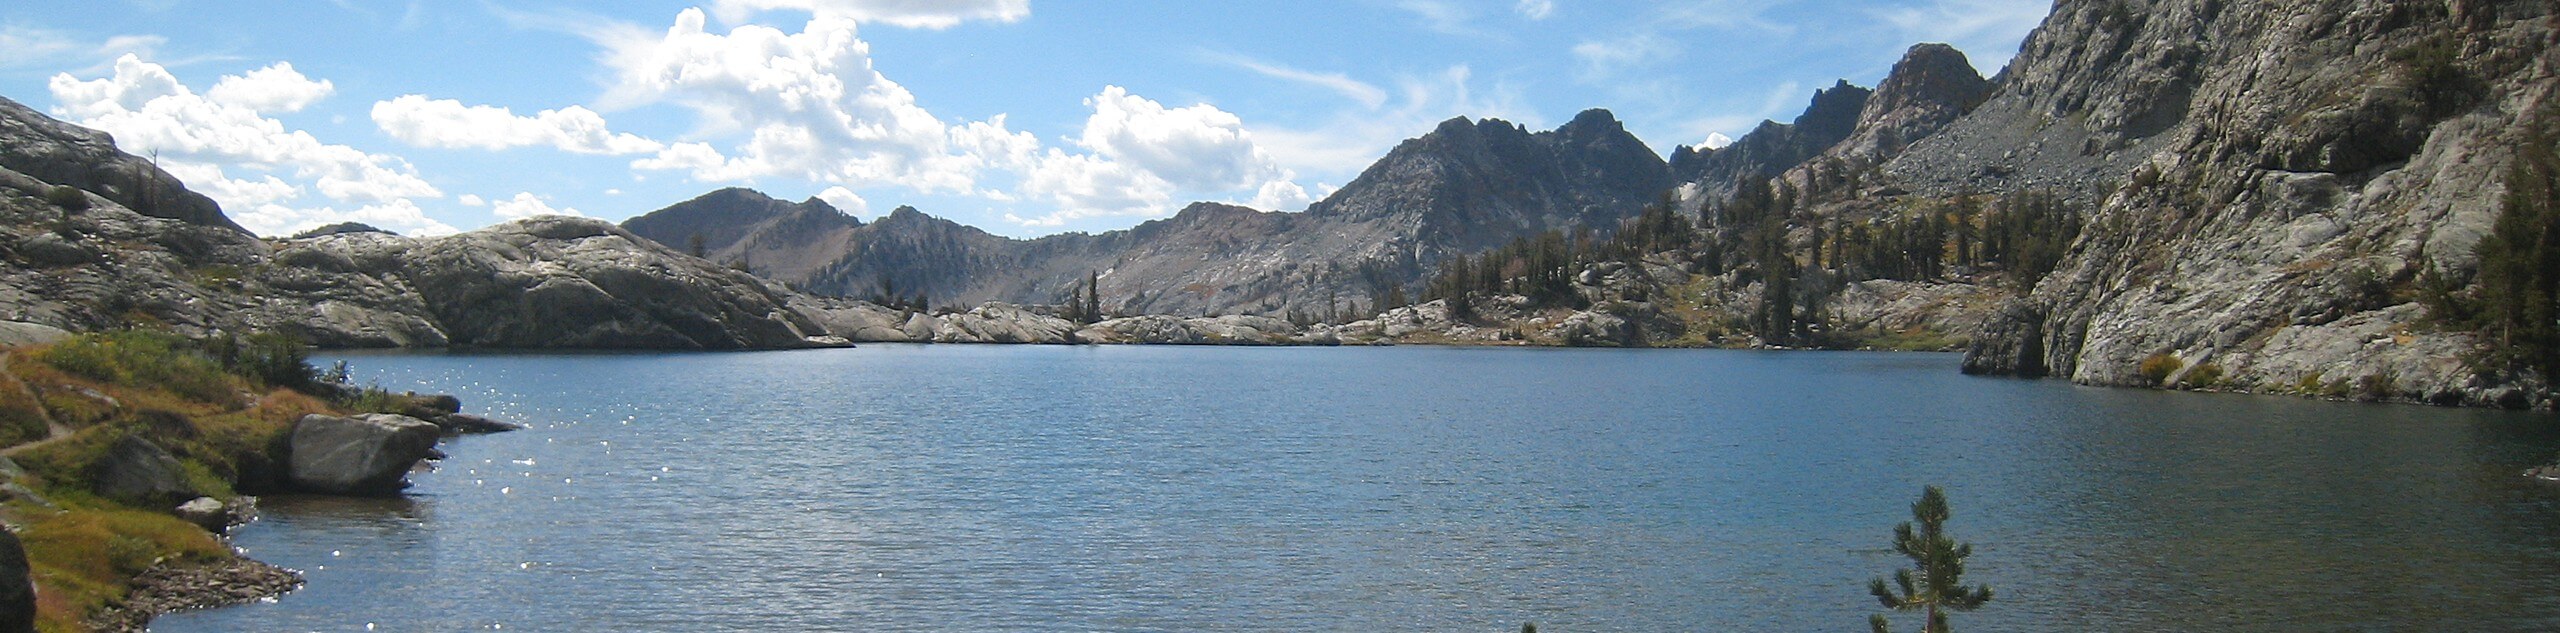 Minaret Lake Trail